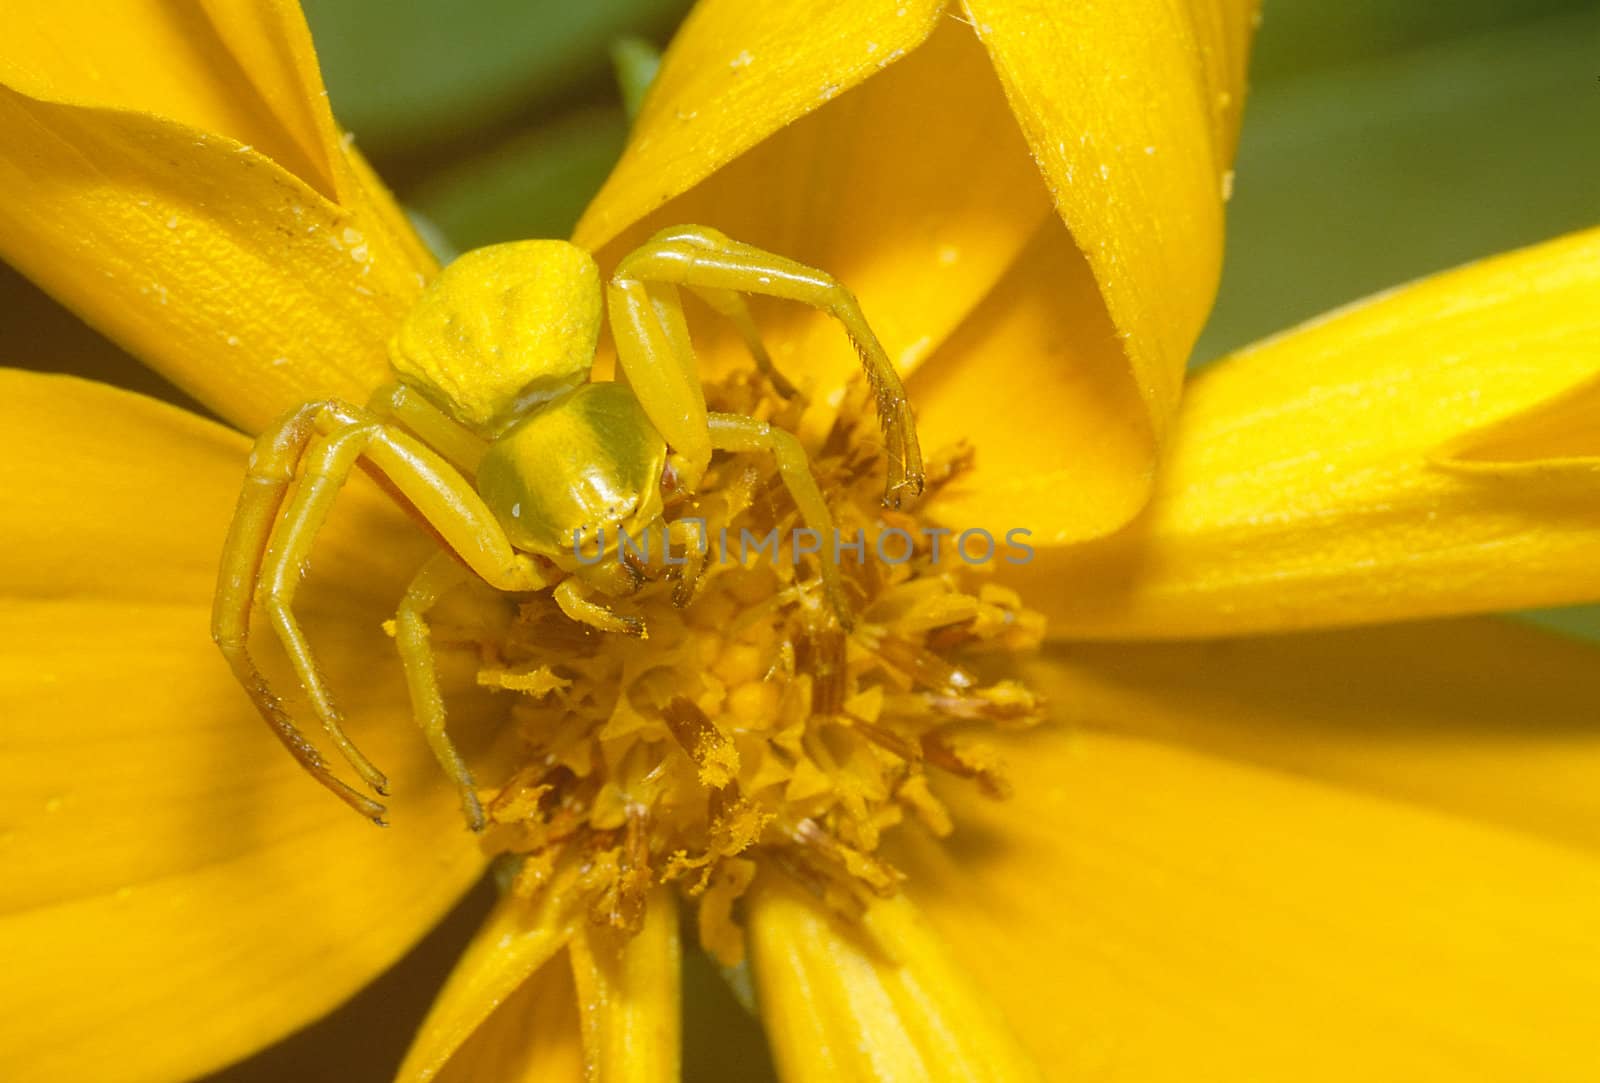 A Goldenrod Spider (Misumena vatia) on a Yellow Flower